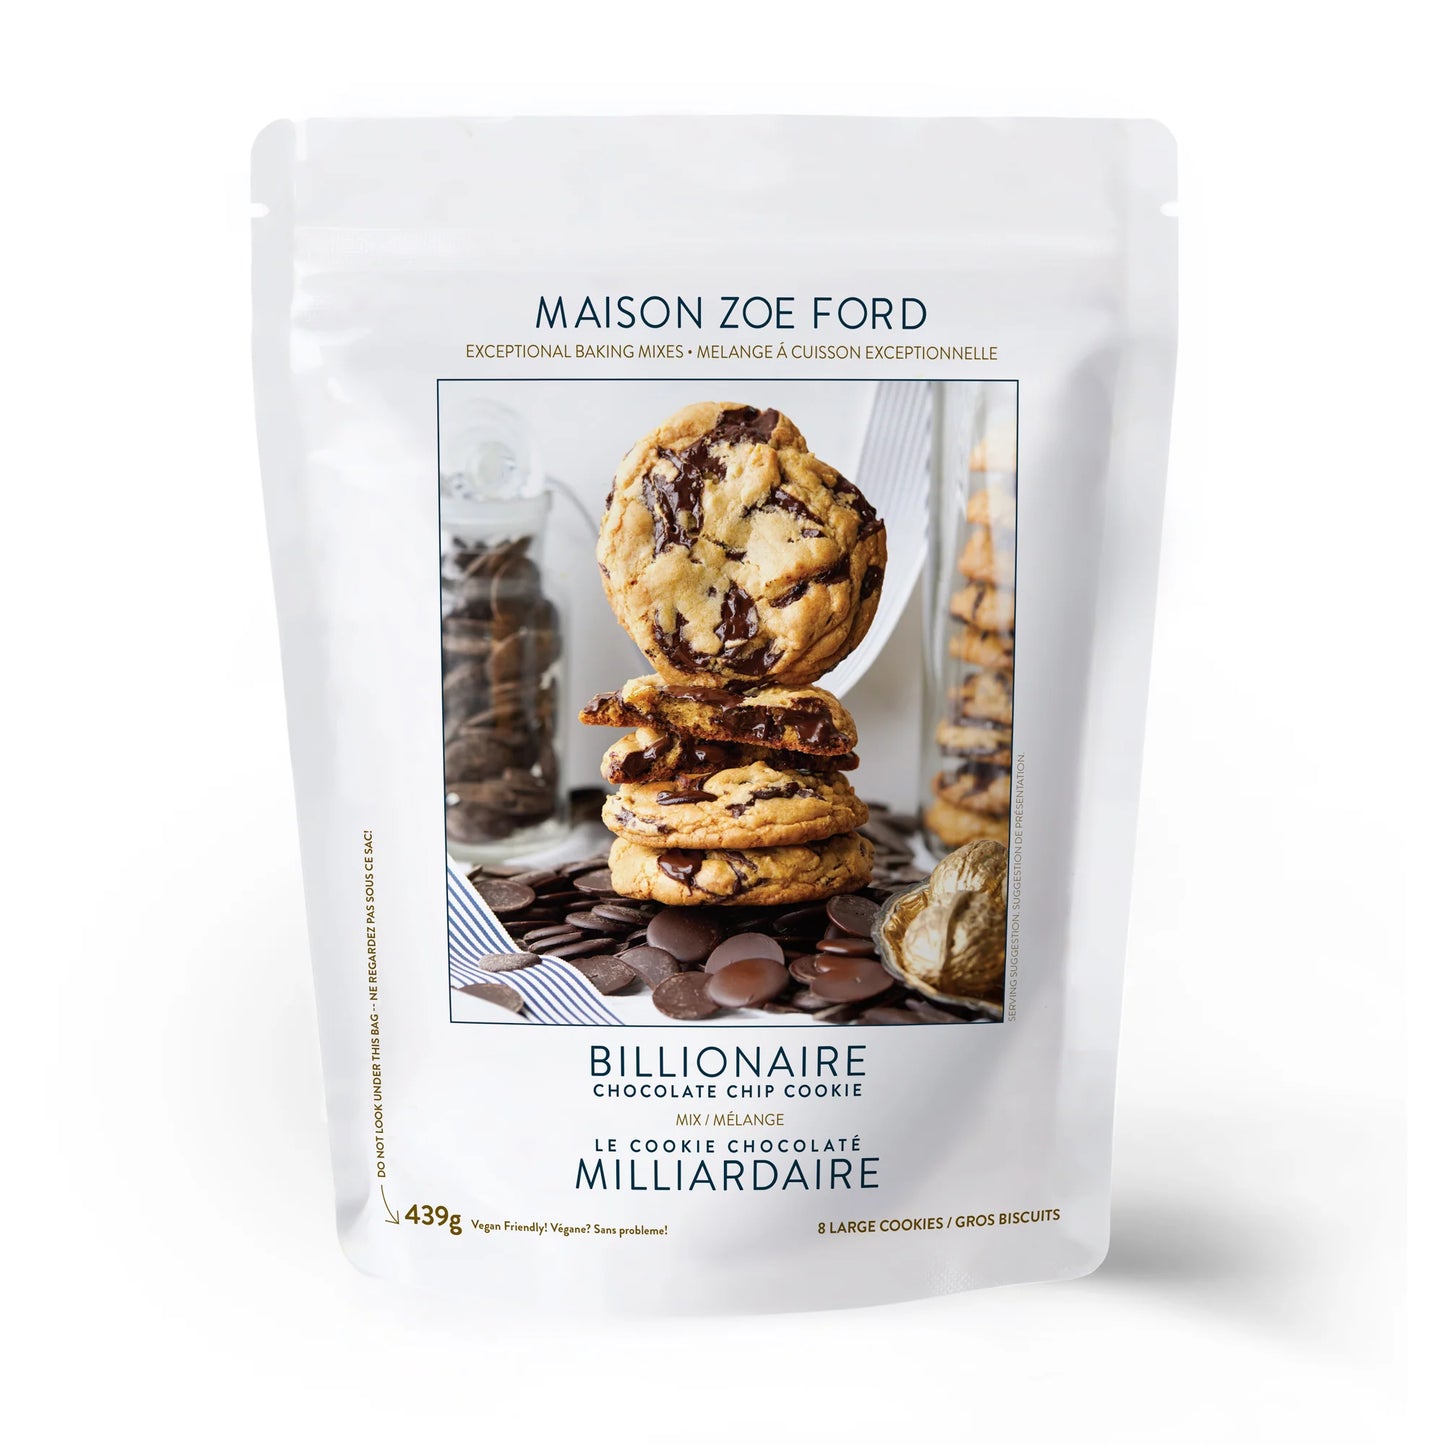 Maison Zoe Ford Billionaire Chocolate Chip Cookie Mix!